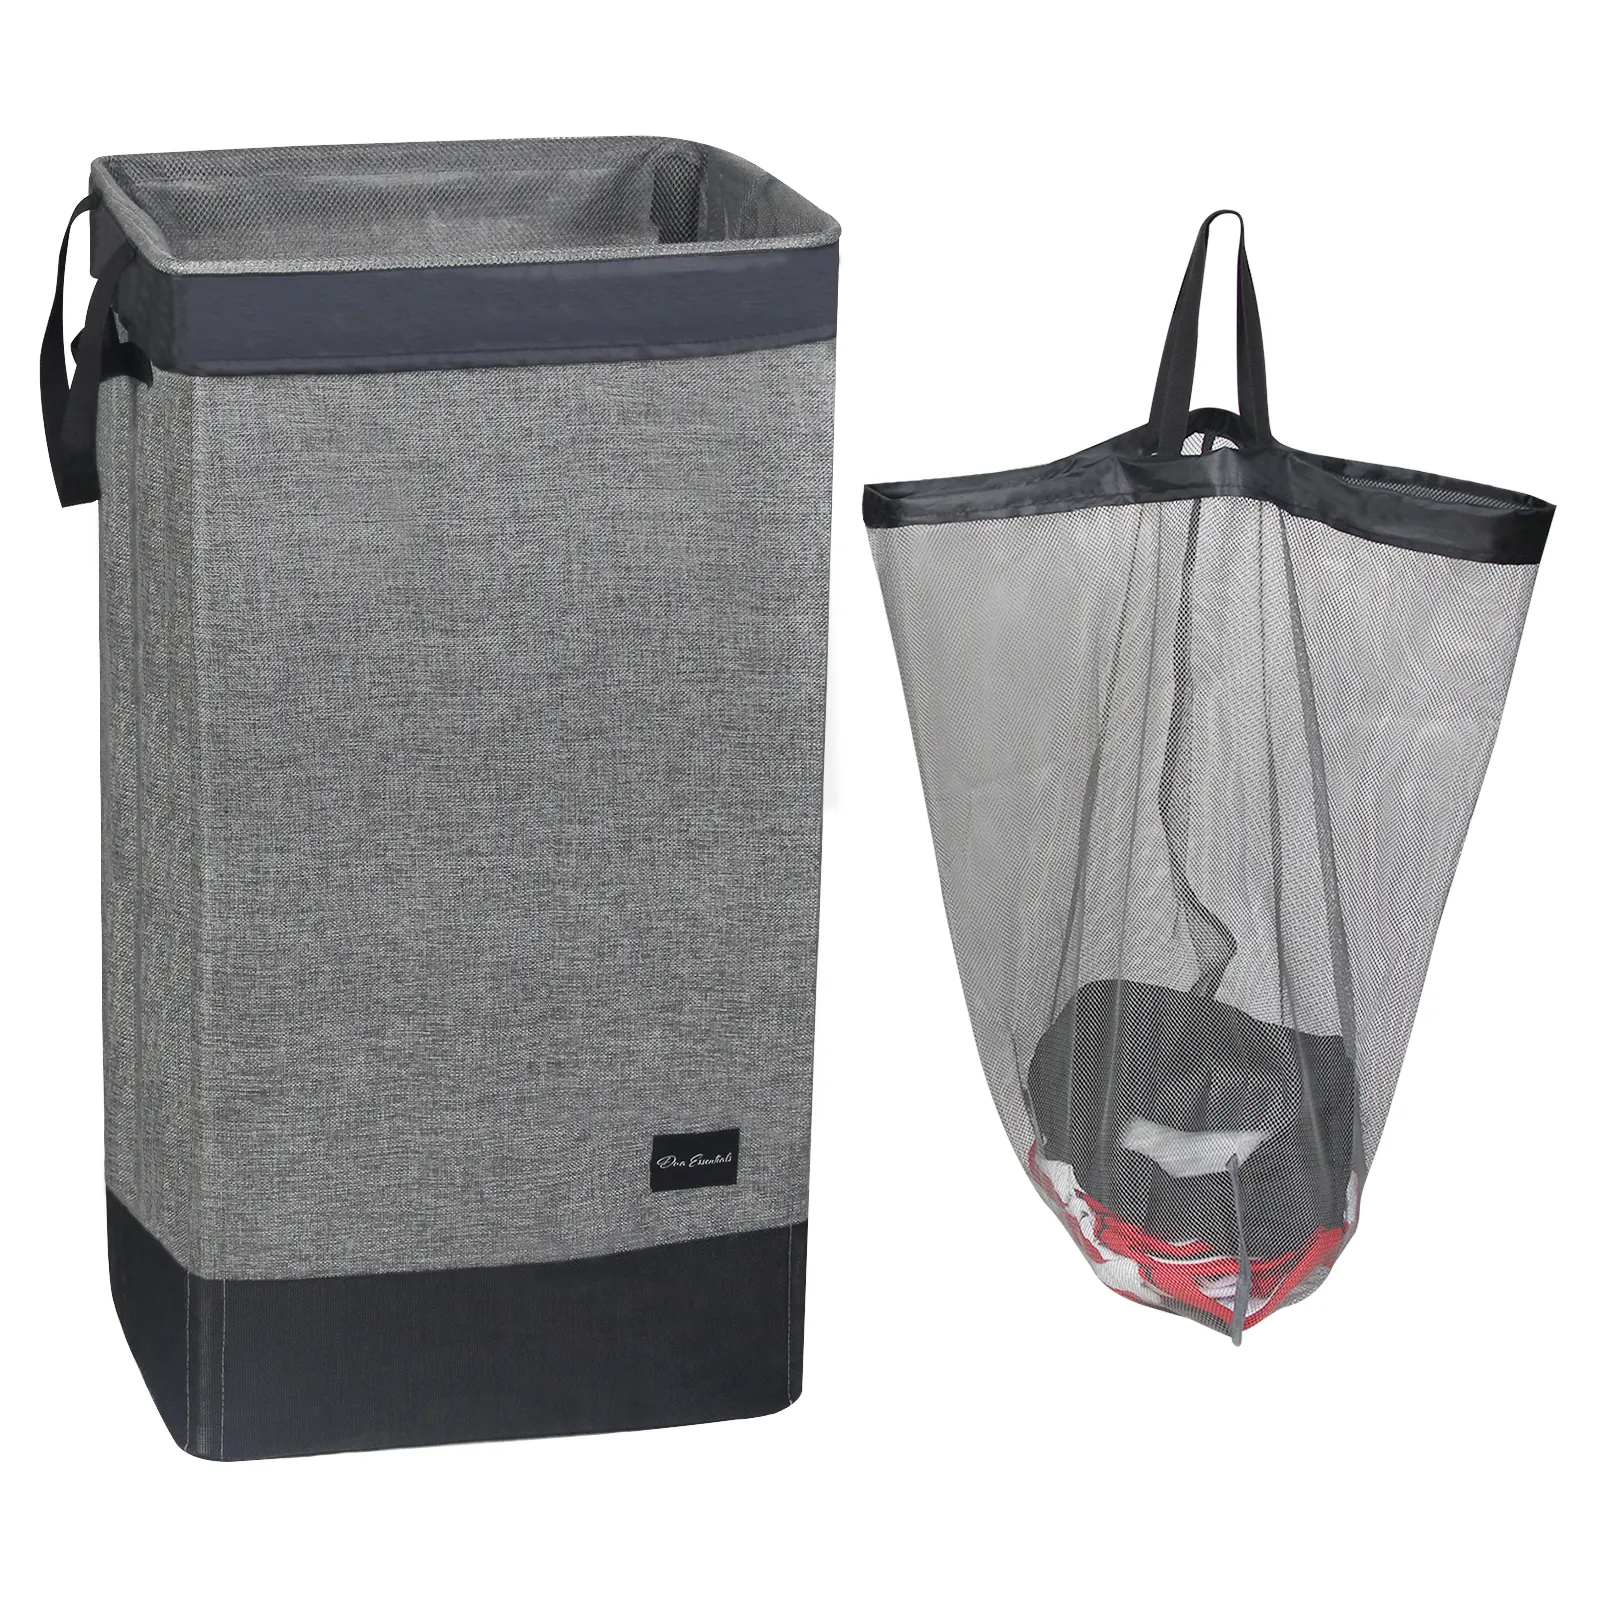 100L XL Laundry Hamper Large Laundry Basket with Removable Bag